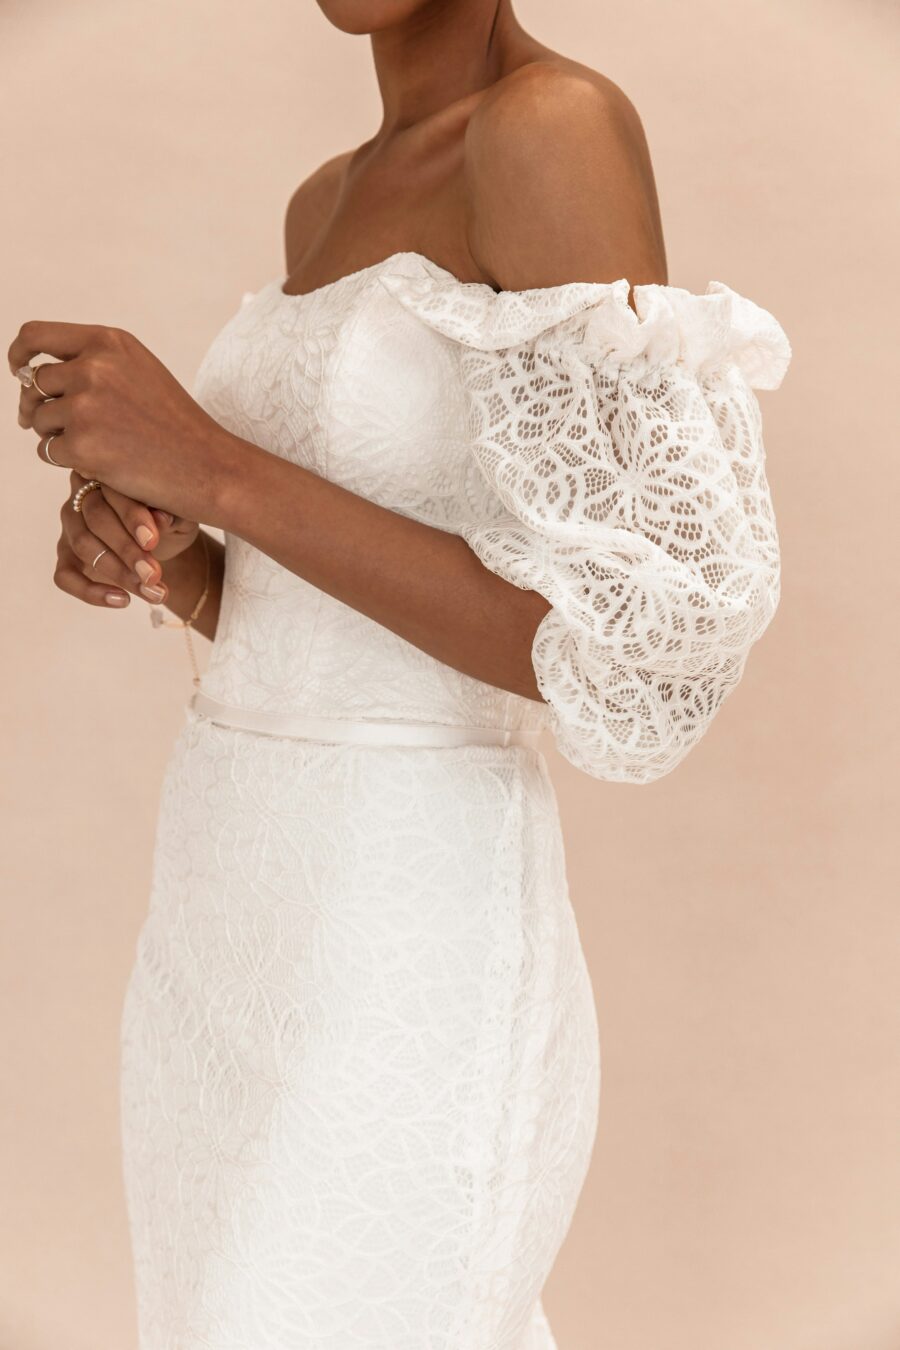 Simple and elegant wedding dresses for civil wedding